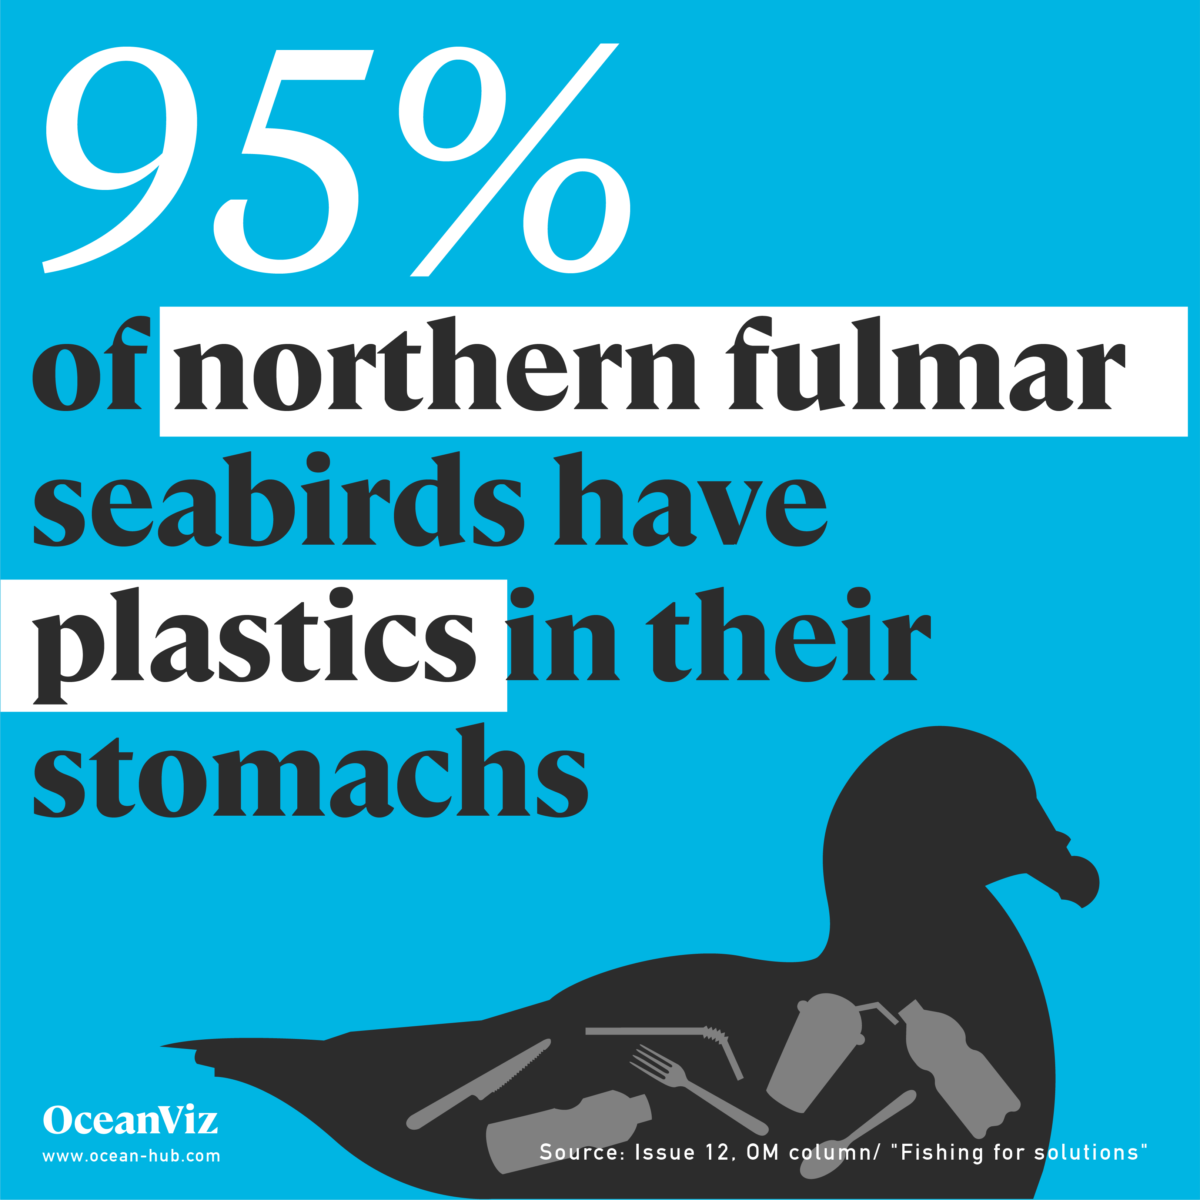 Northern fulmar plastics